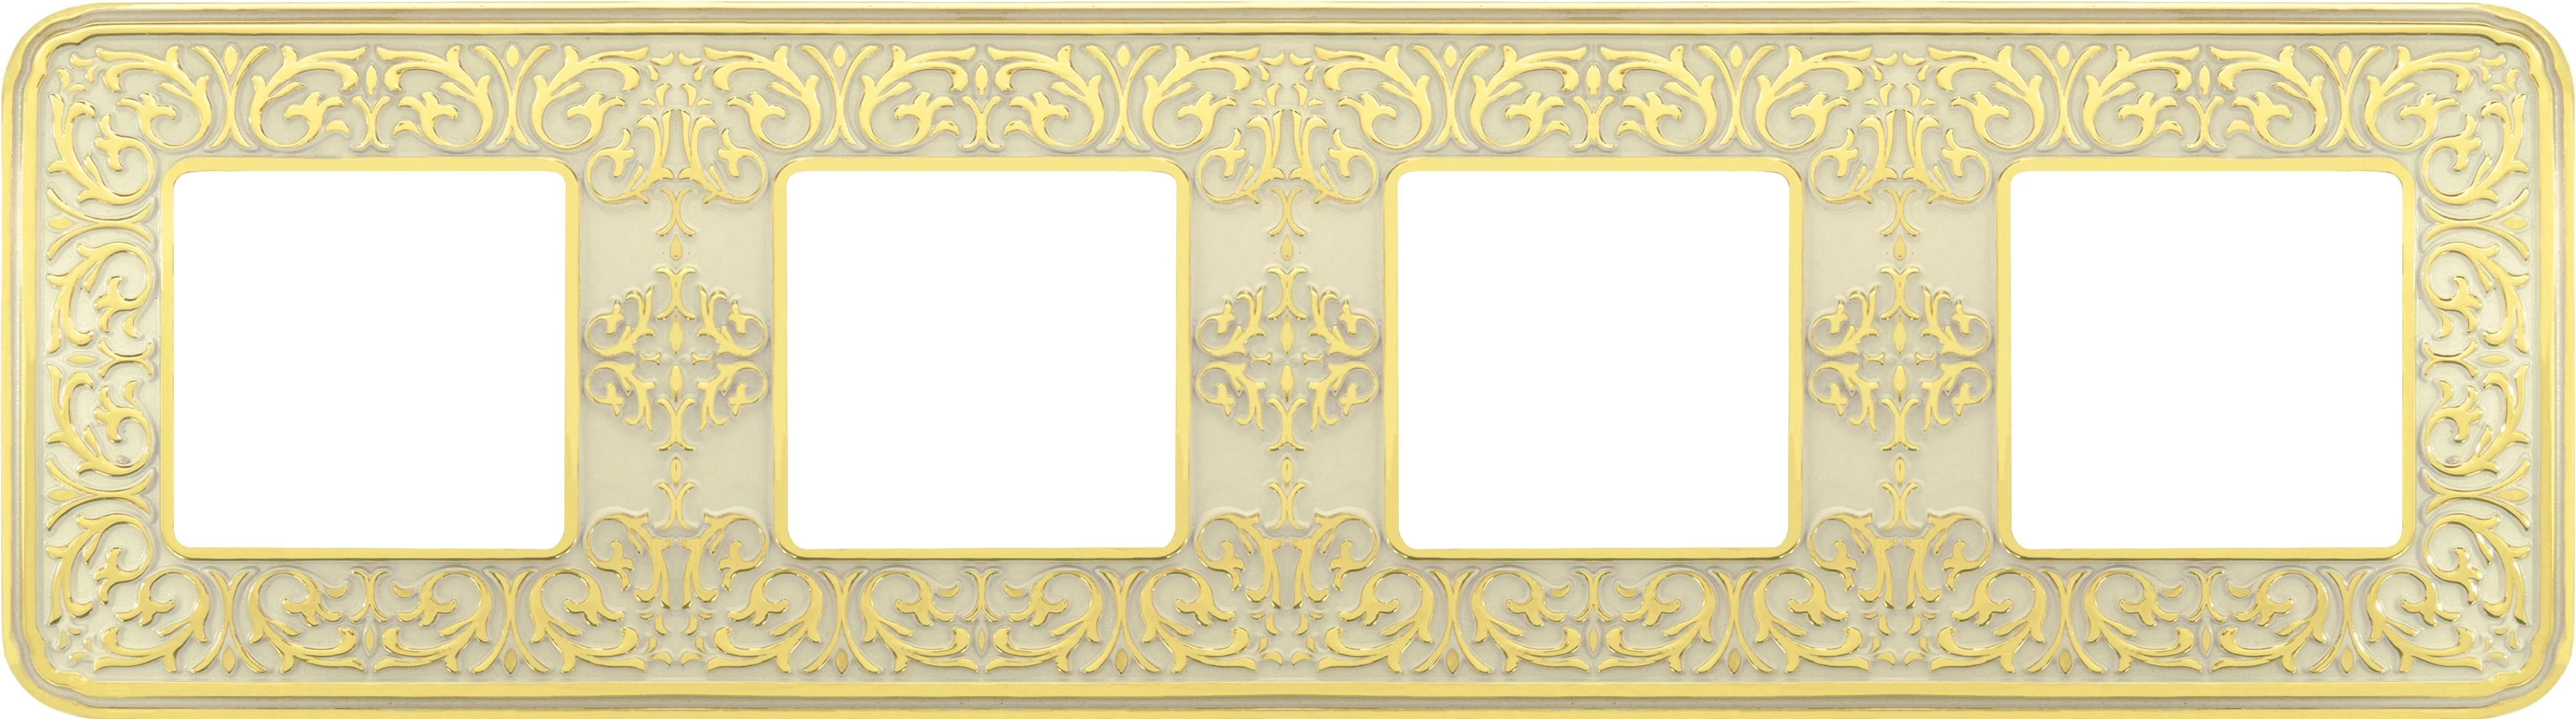  артикул FD01374OP название Рамка 4-ая (четверная), цвет Светлое золото/Белая патина, Emporio, Fede